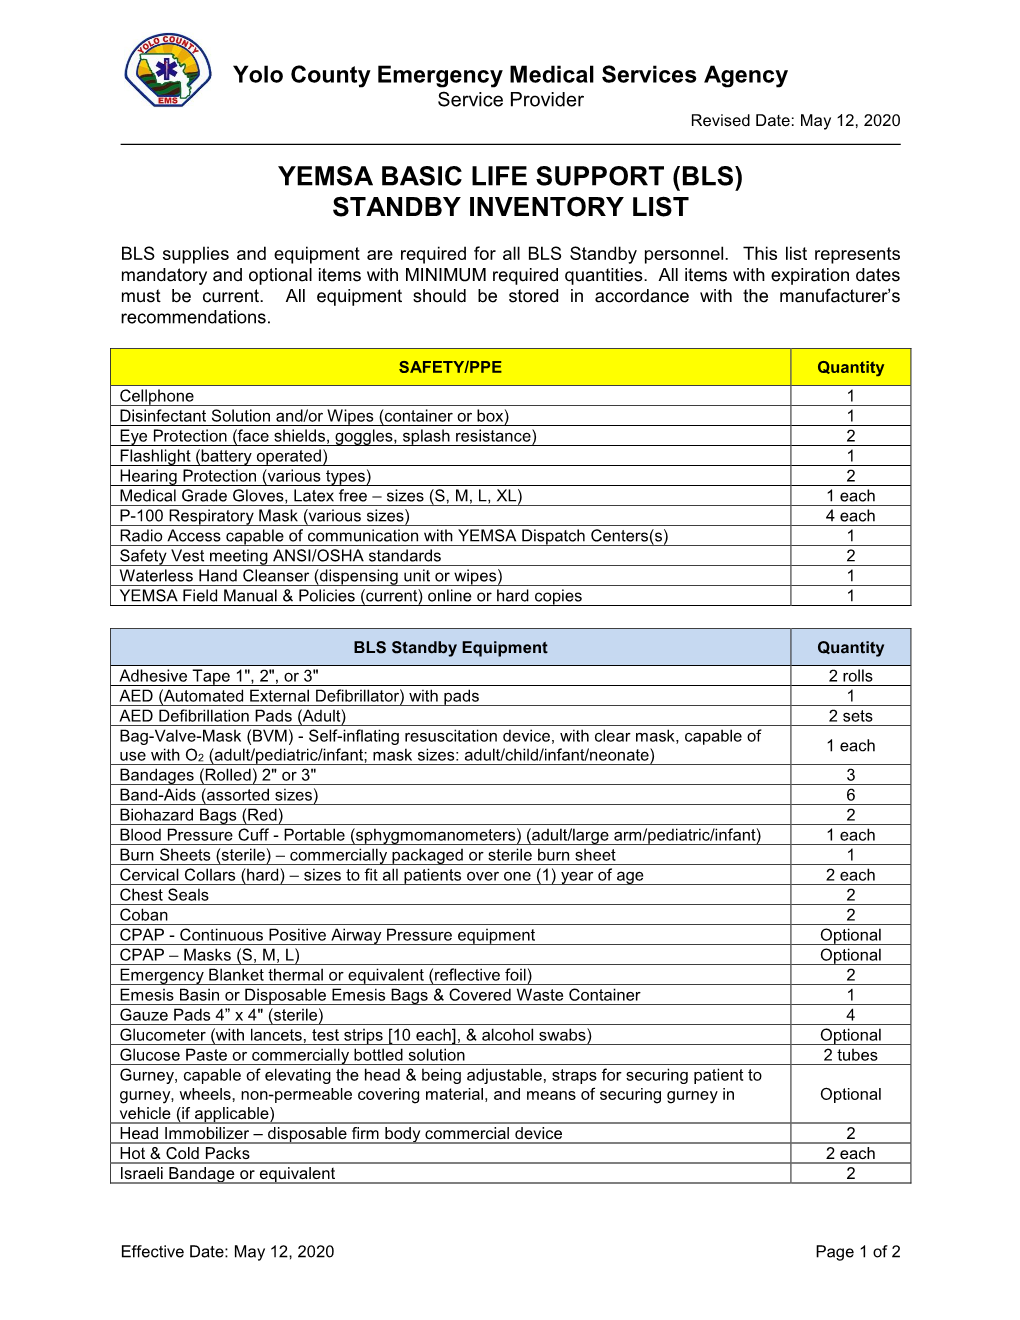 Yemsa Basic Life Support (Bls) Standby Inventory List